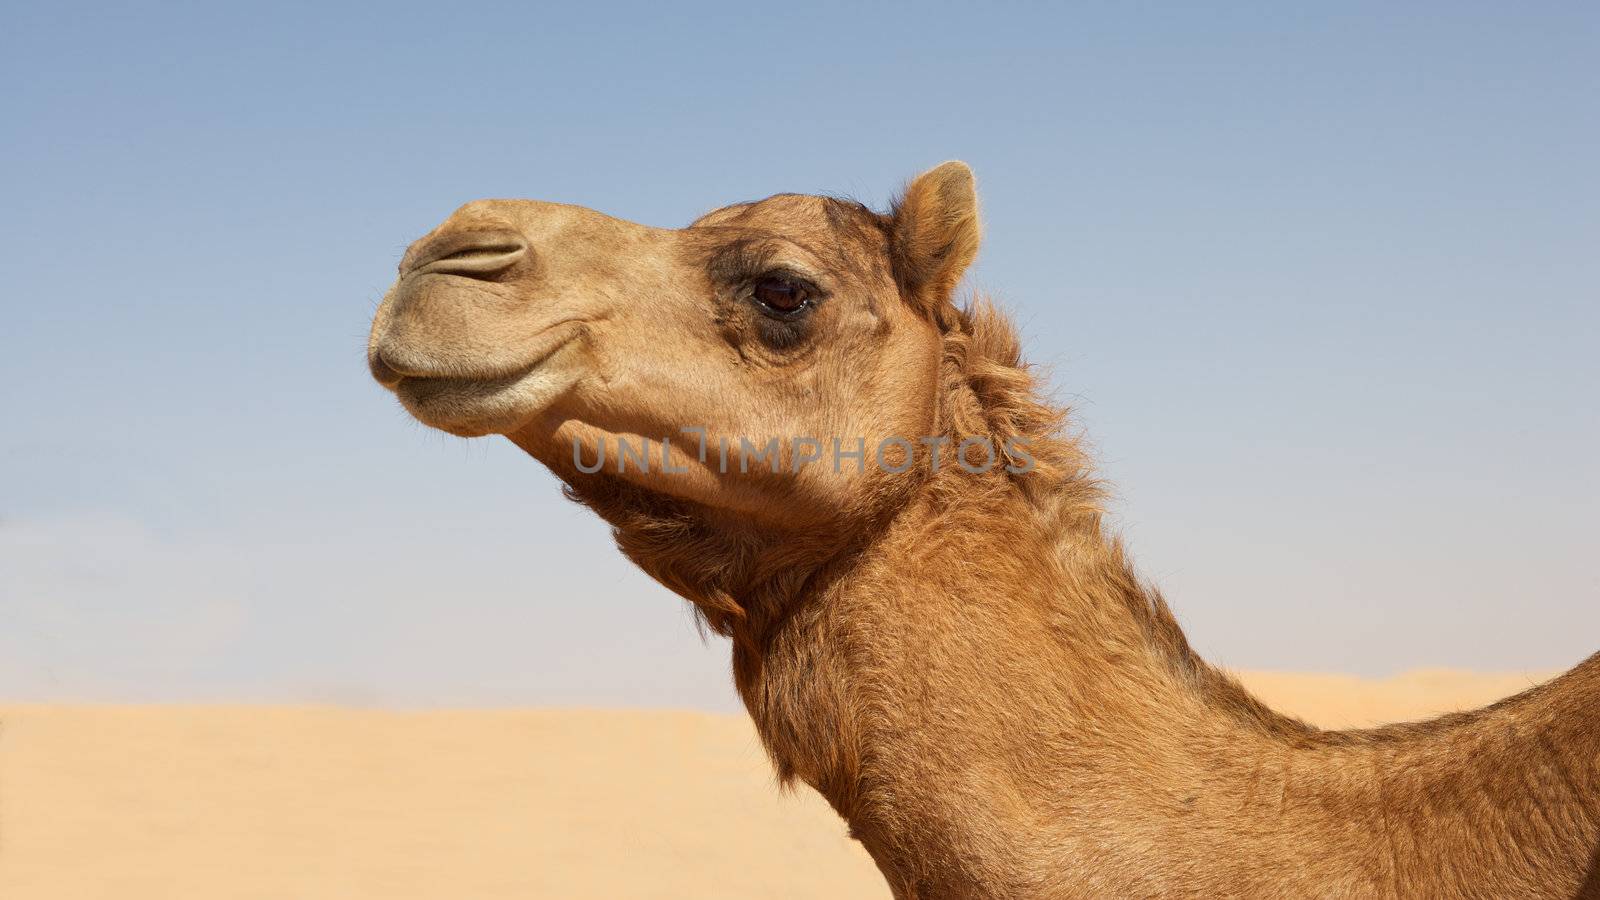 Camel Portrait by zambezi